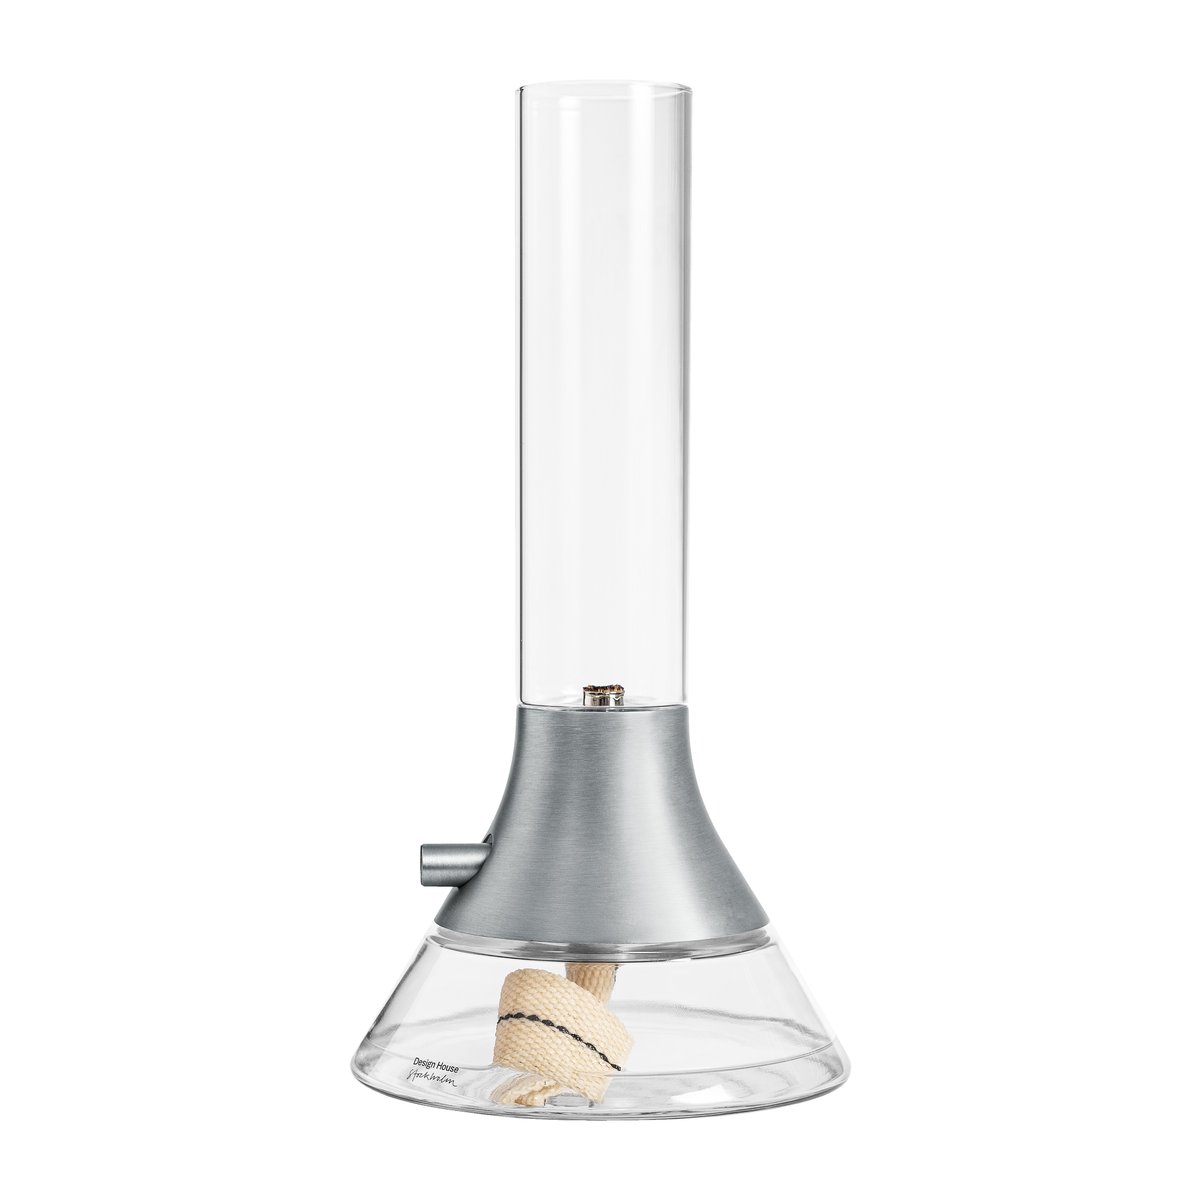 Design House Stockholm Fyr petroleumlamp 31 cm Transparant-zilver